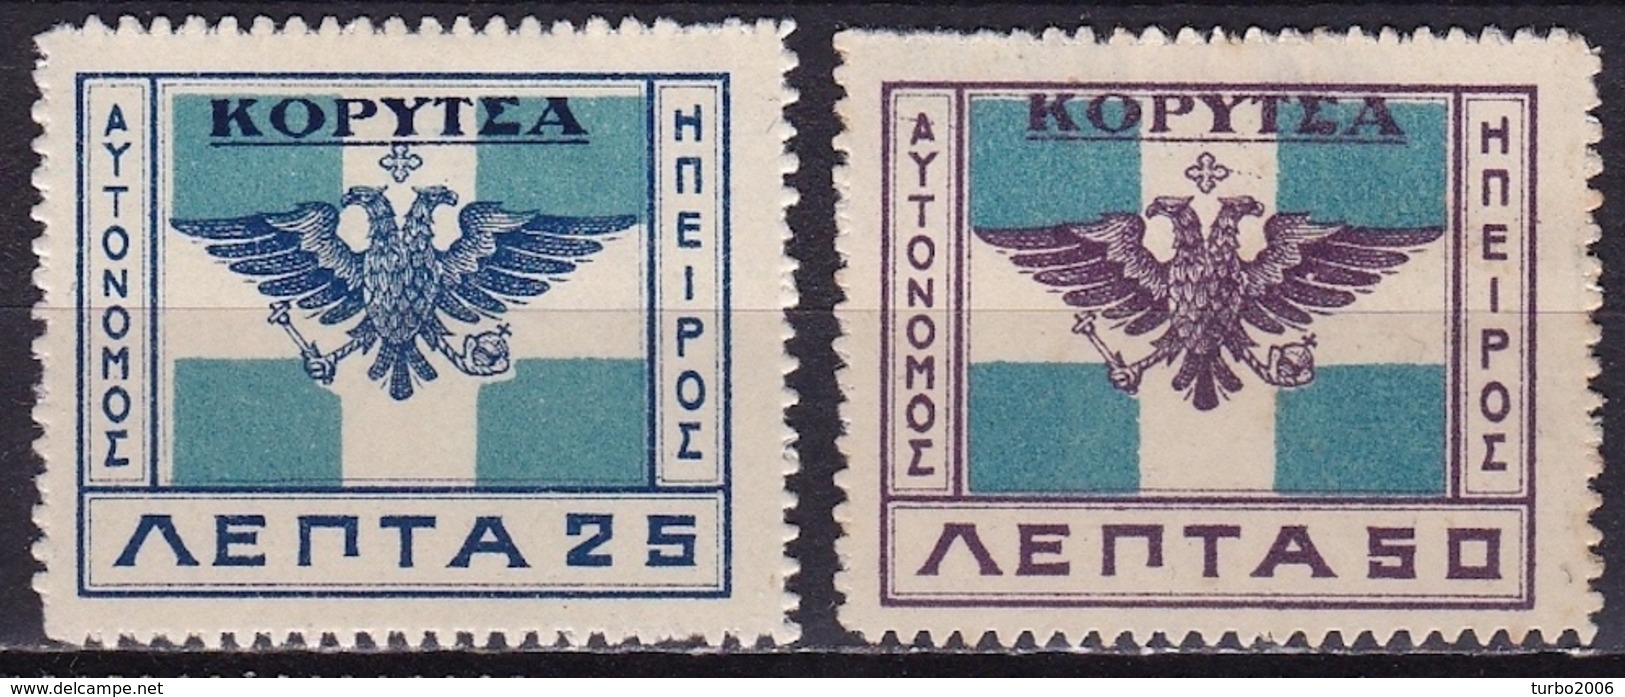 EPIRUS Autonomous 1914 Issue Of The Hellenic Flag With Double-headed Eagle Overprinted KOPYTSA Complete MH Set Vl. 40/41 - North Epirus